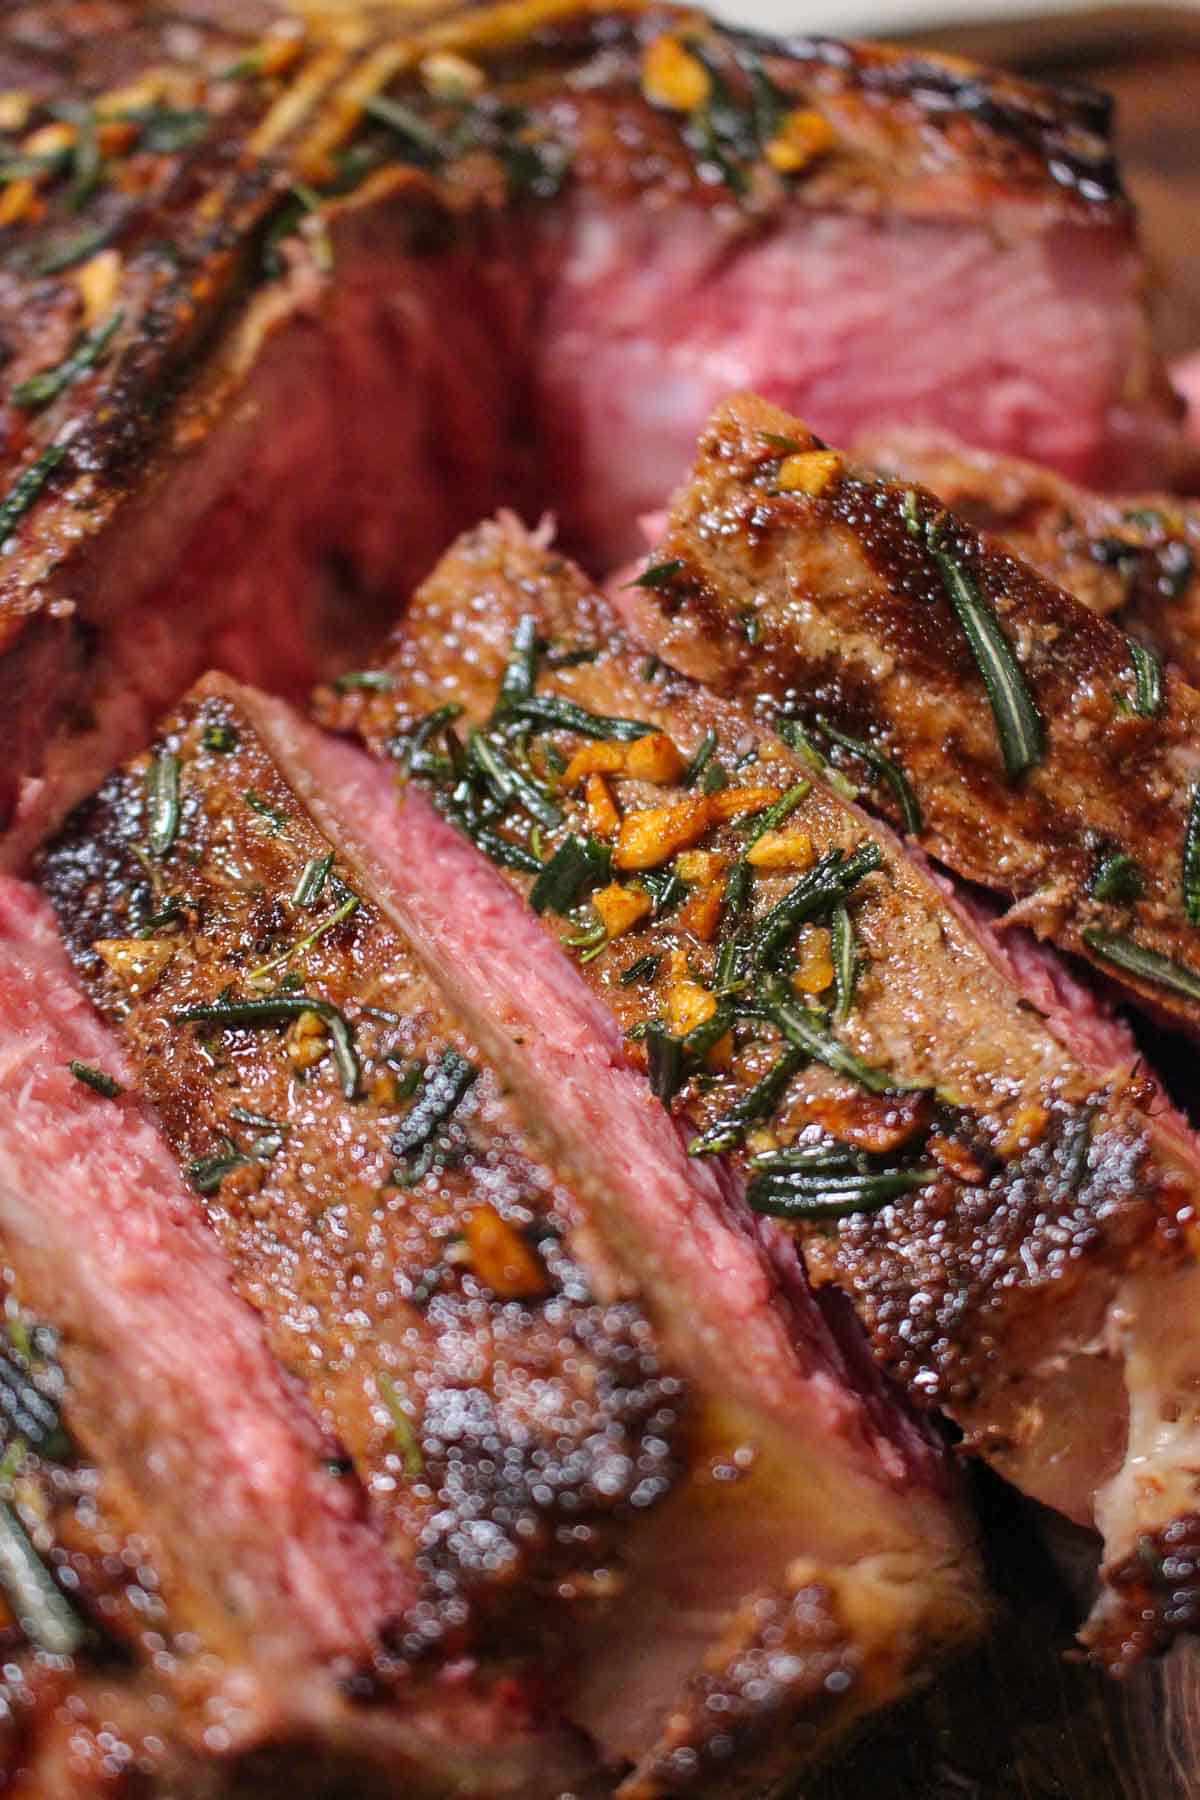 A close up shot of the sliced steak.